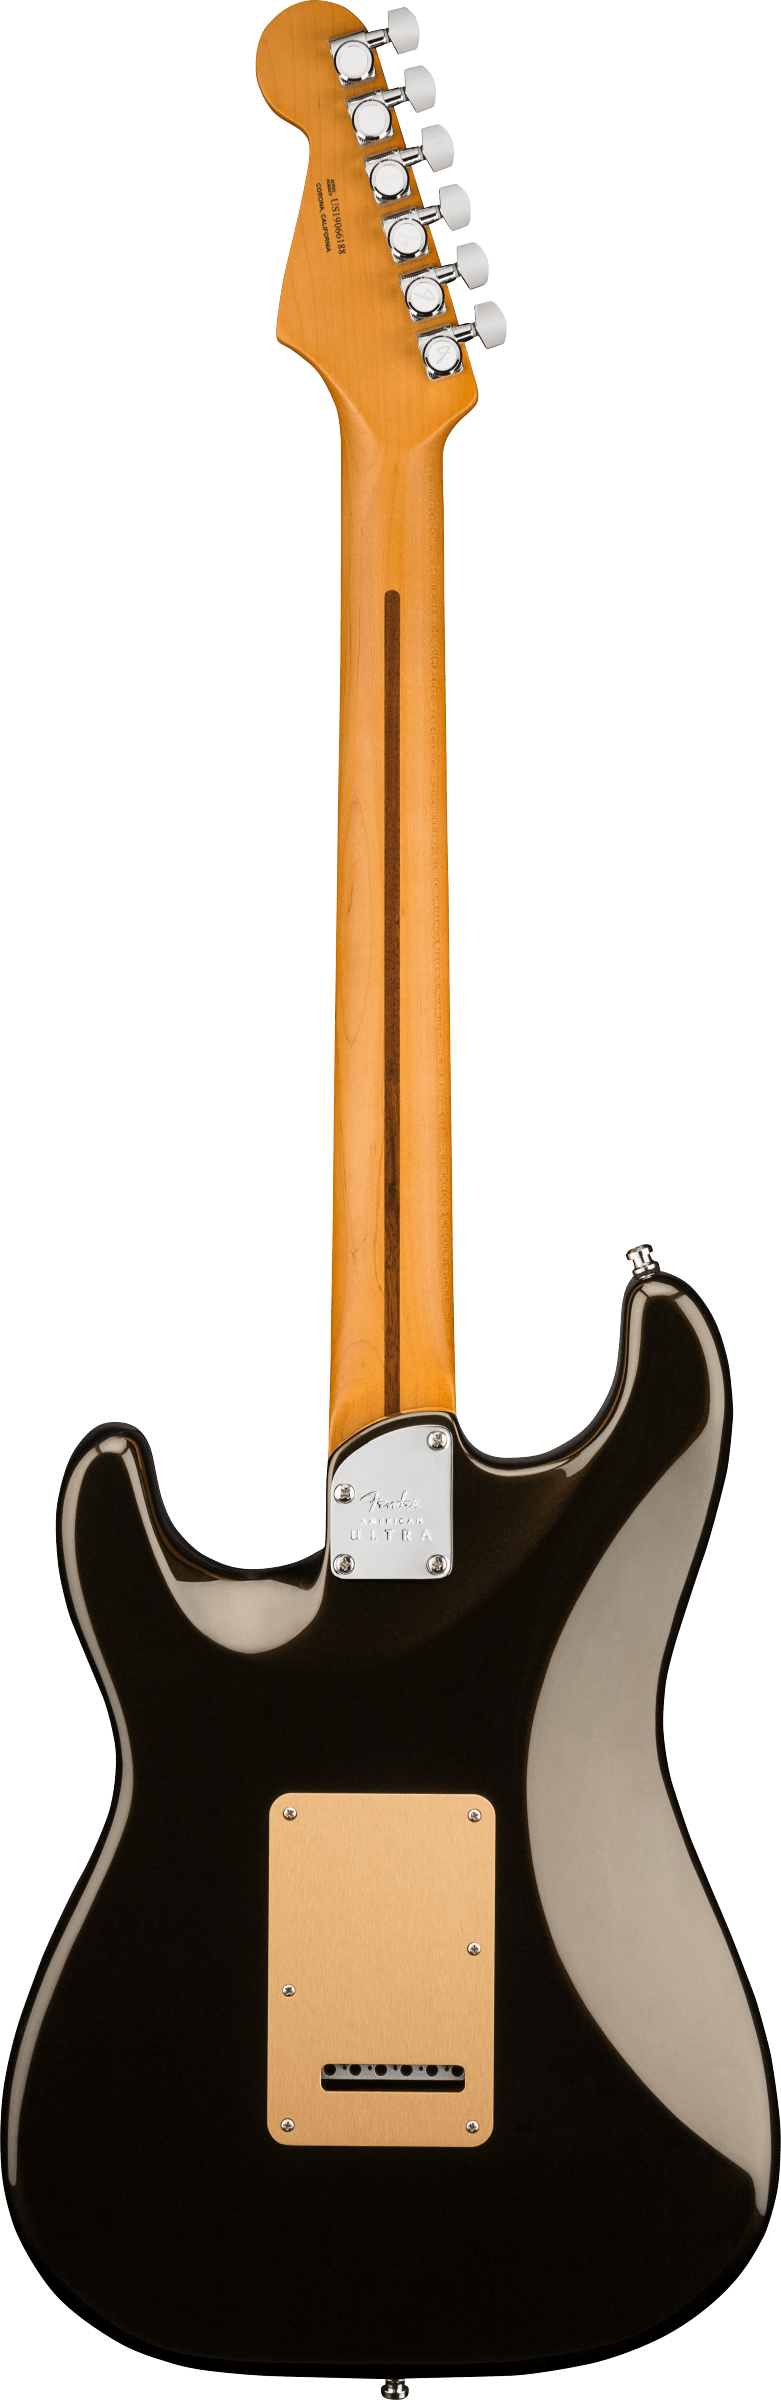 Black of Fender Stratocaster MP electric guitar in black Texas Tea color Tone Shop Guitars DFW